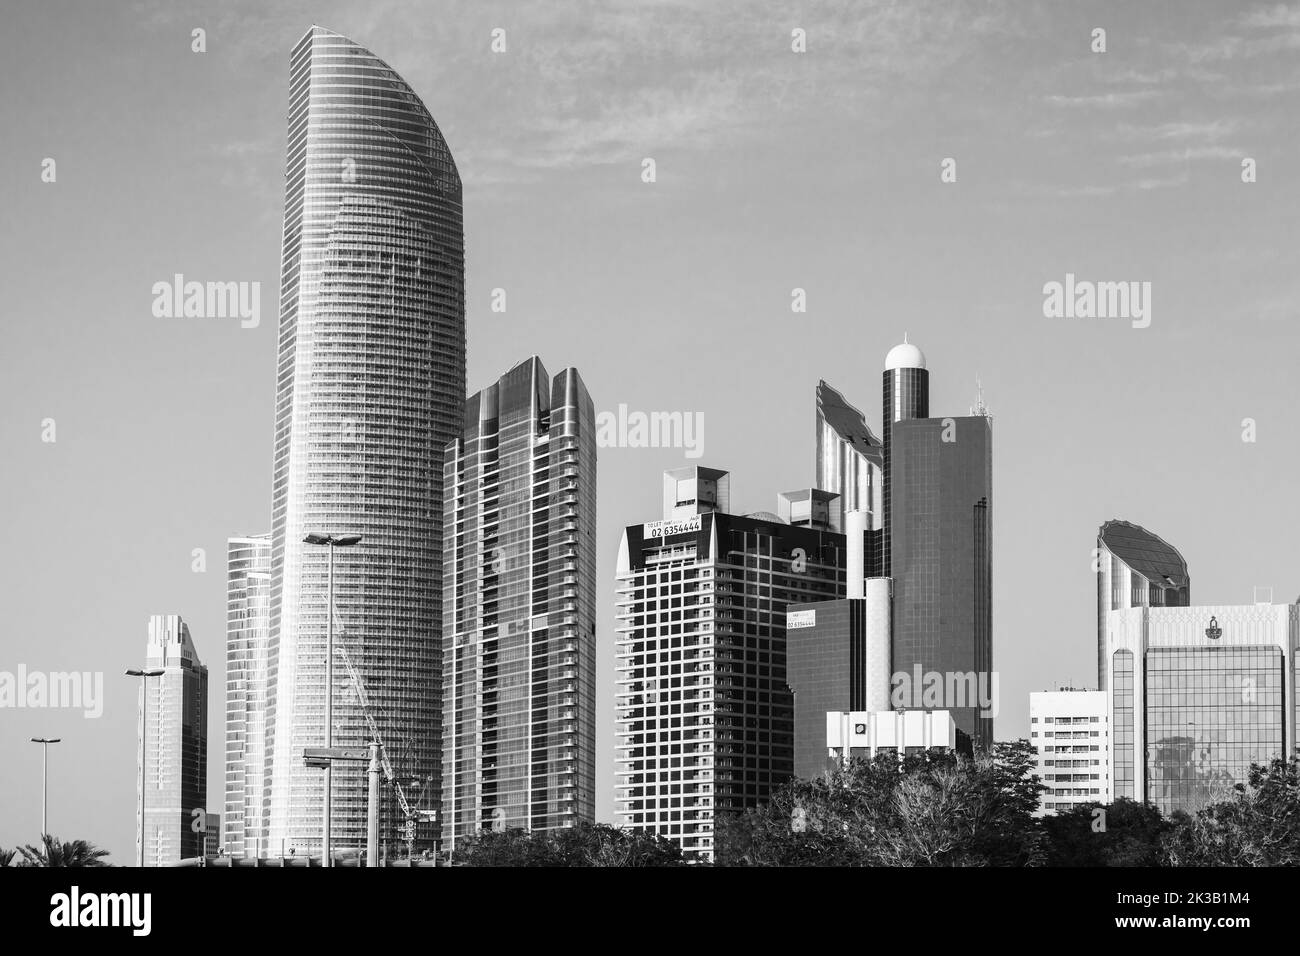 Abu Dhabi, United Arab Emirates - April 9, 2019: Skyline with skyscrapers of Abu Dhabi downtown, black and white photo Stock Photo